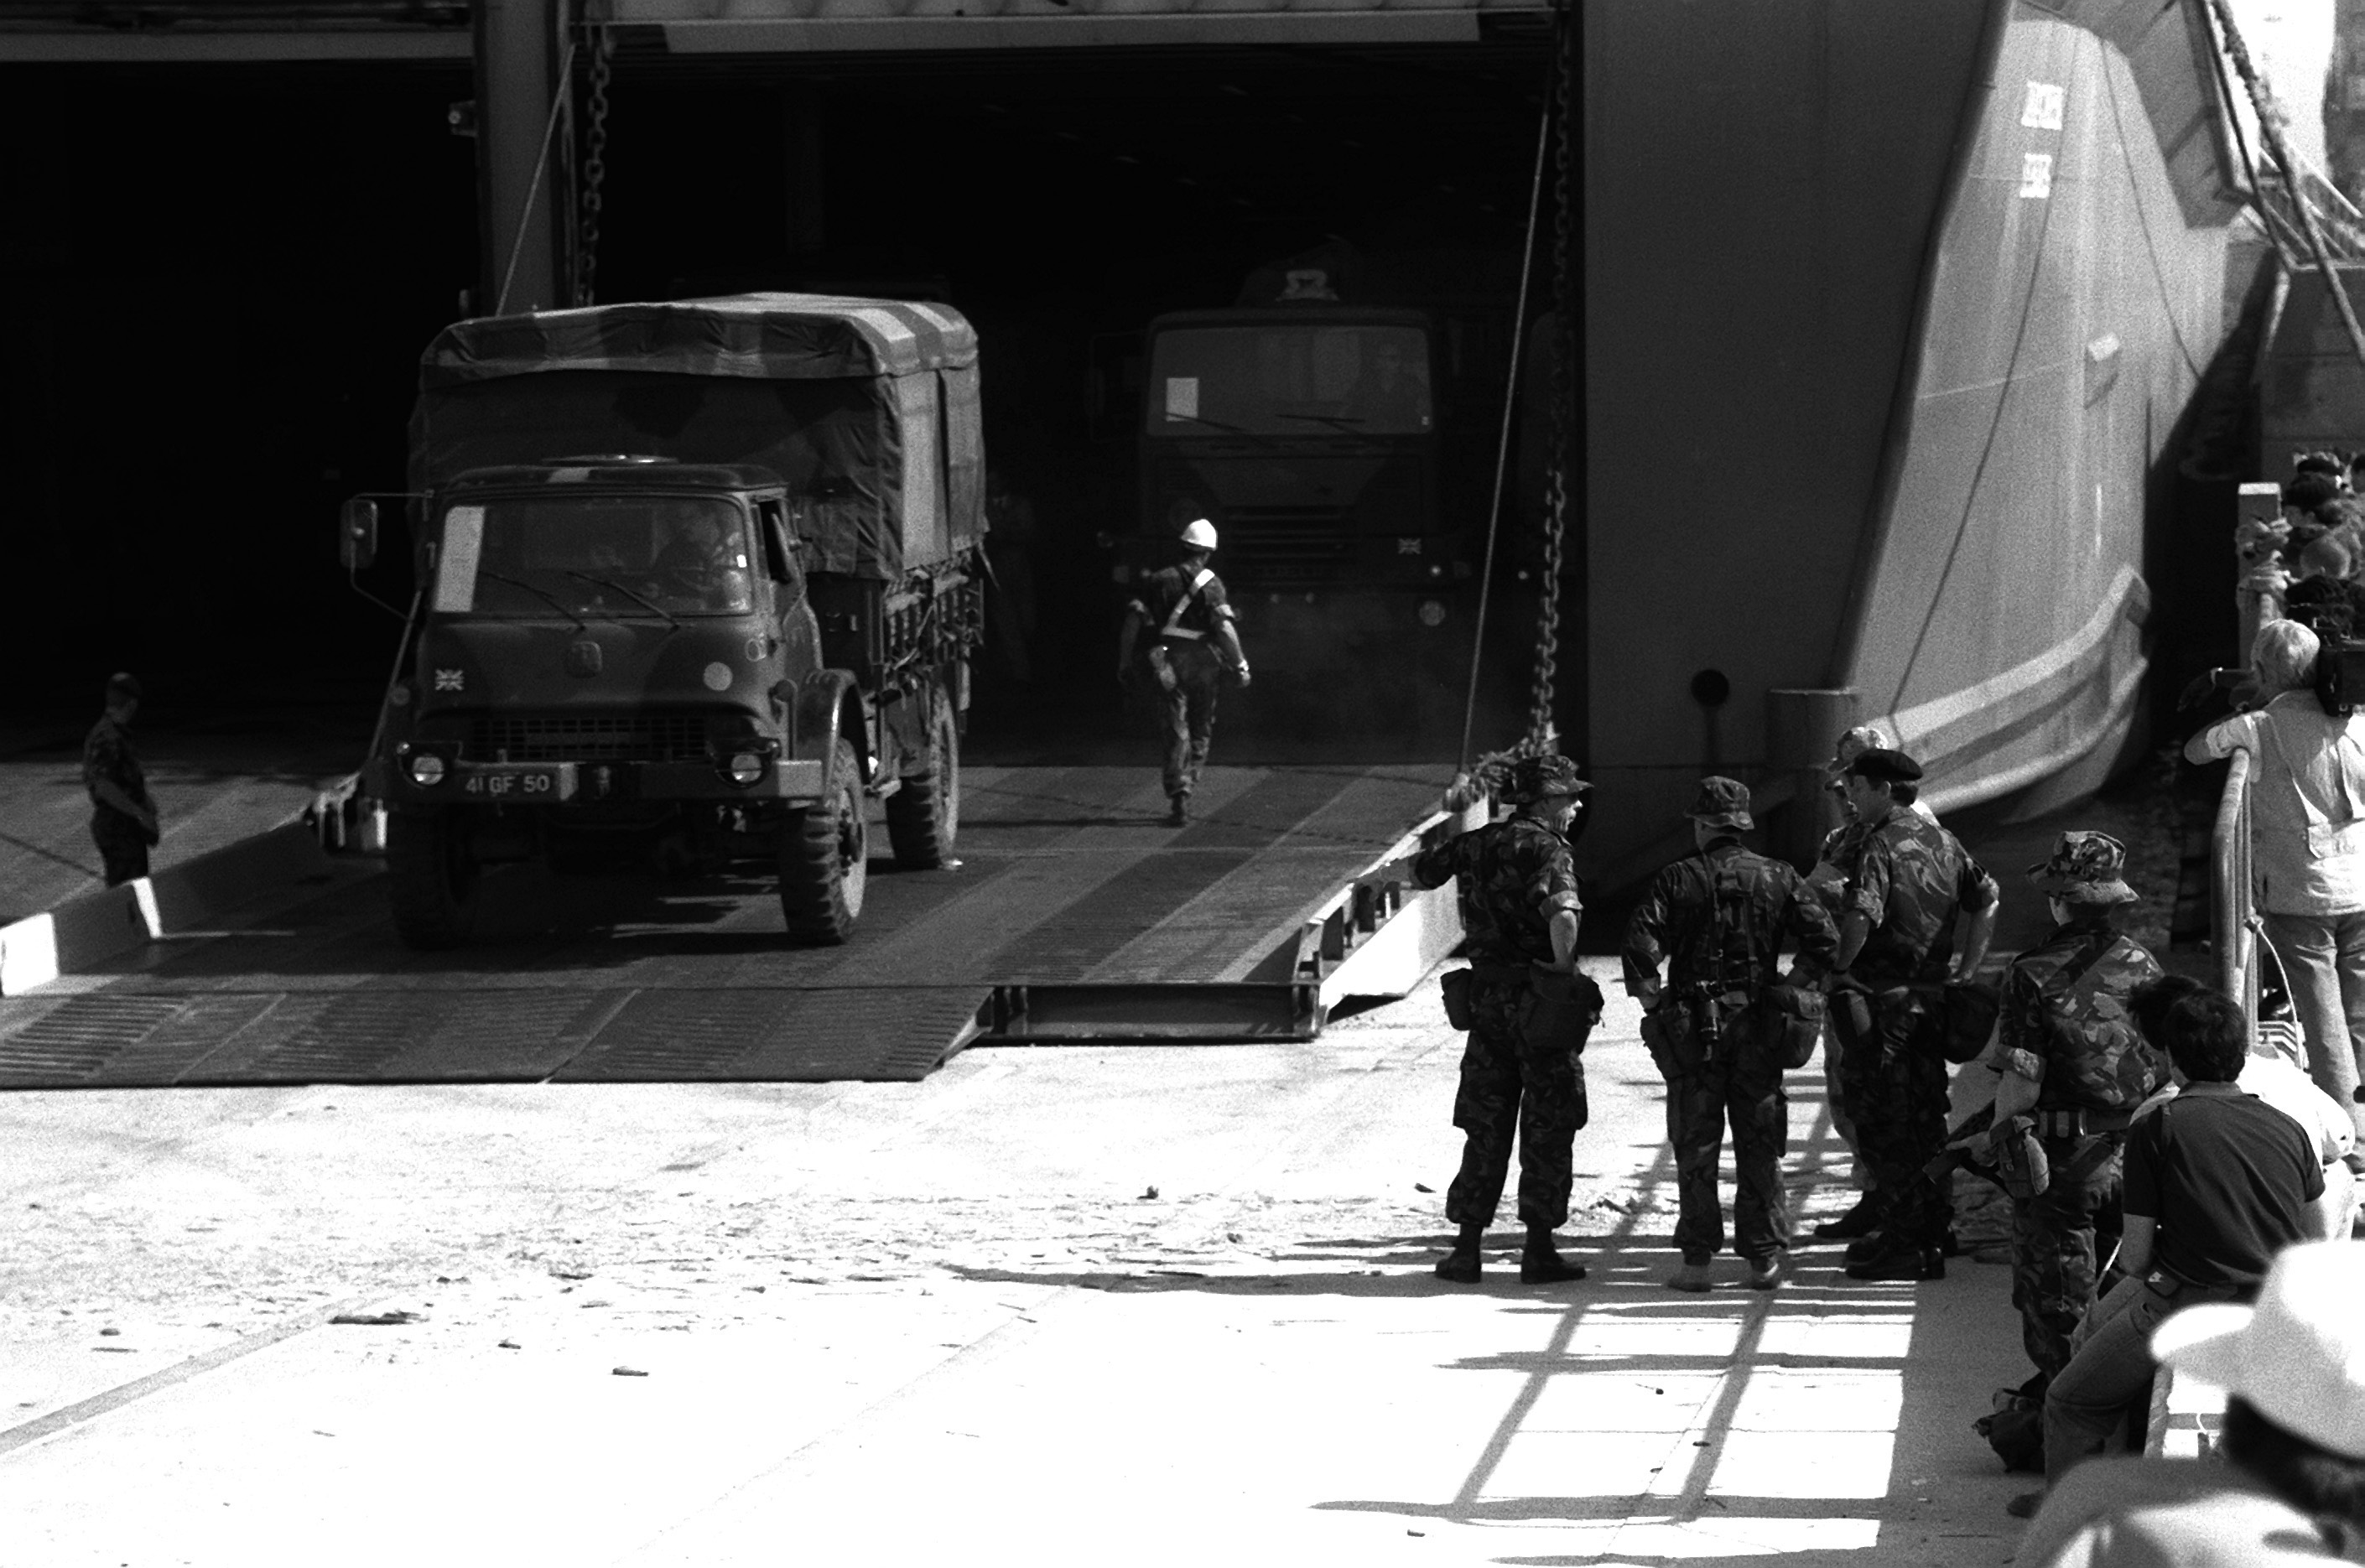 Bedford MK 4x4 truck leaves the Danish cargo ship Dana Cimbria during Operation Desert Shield